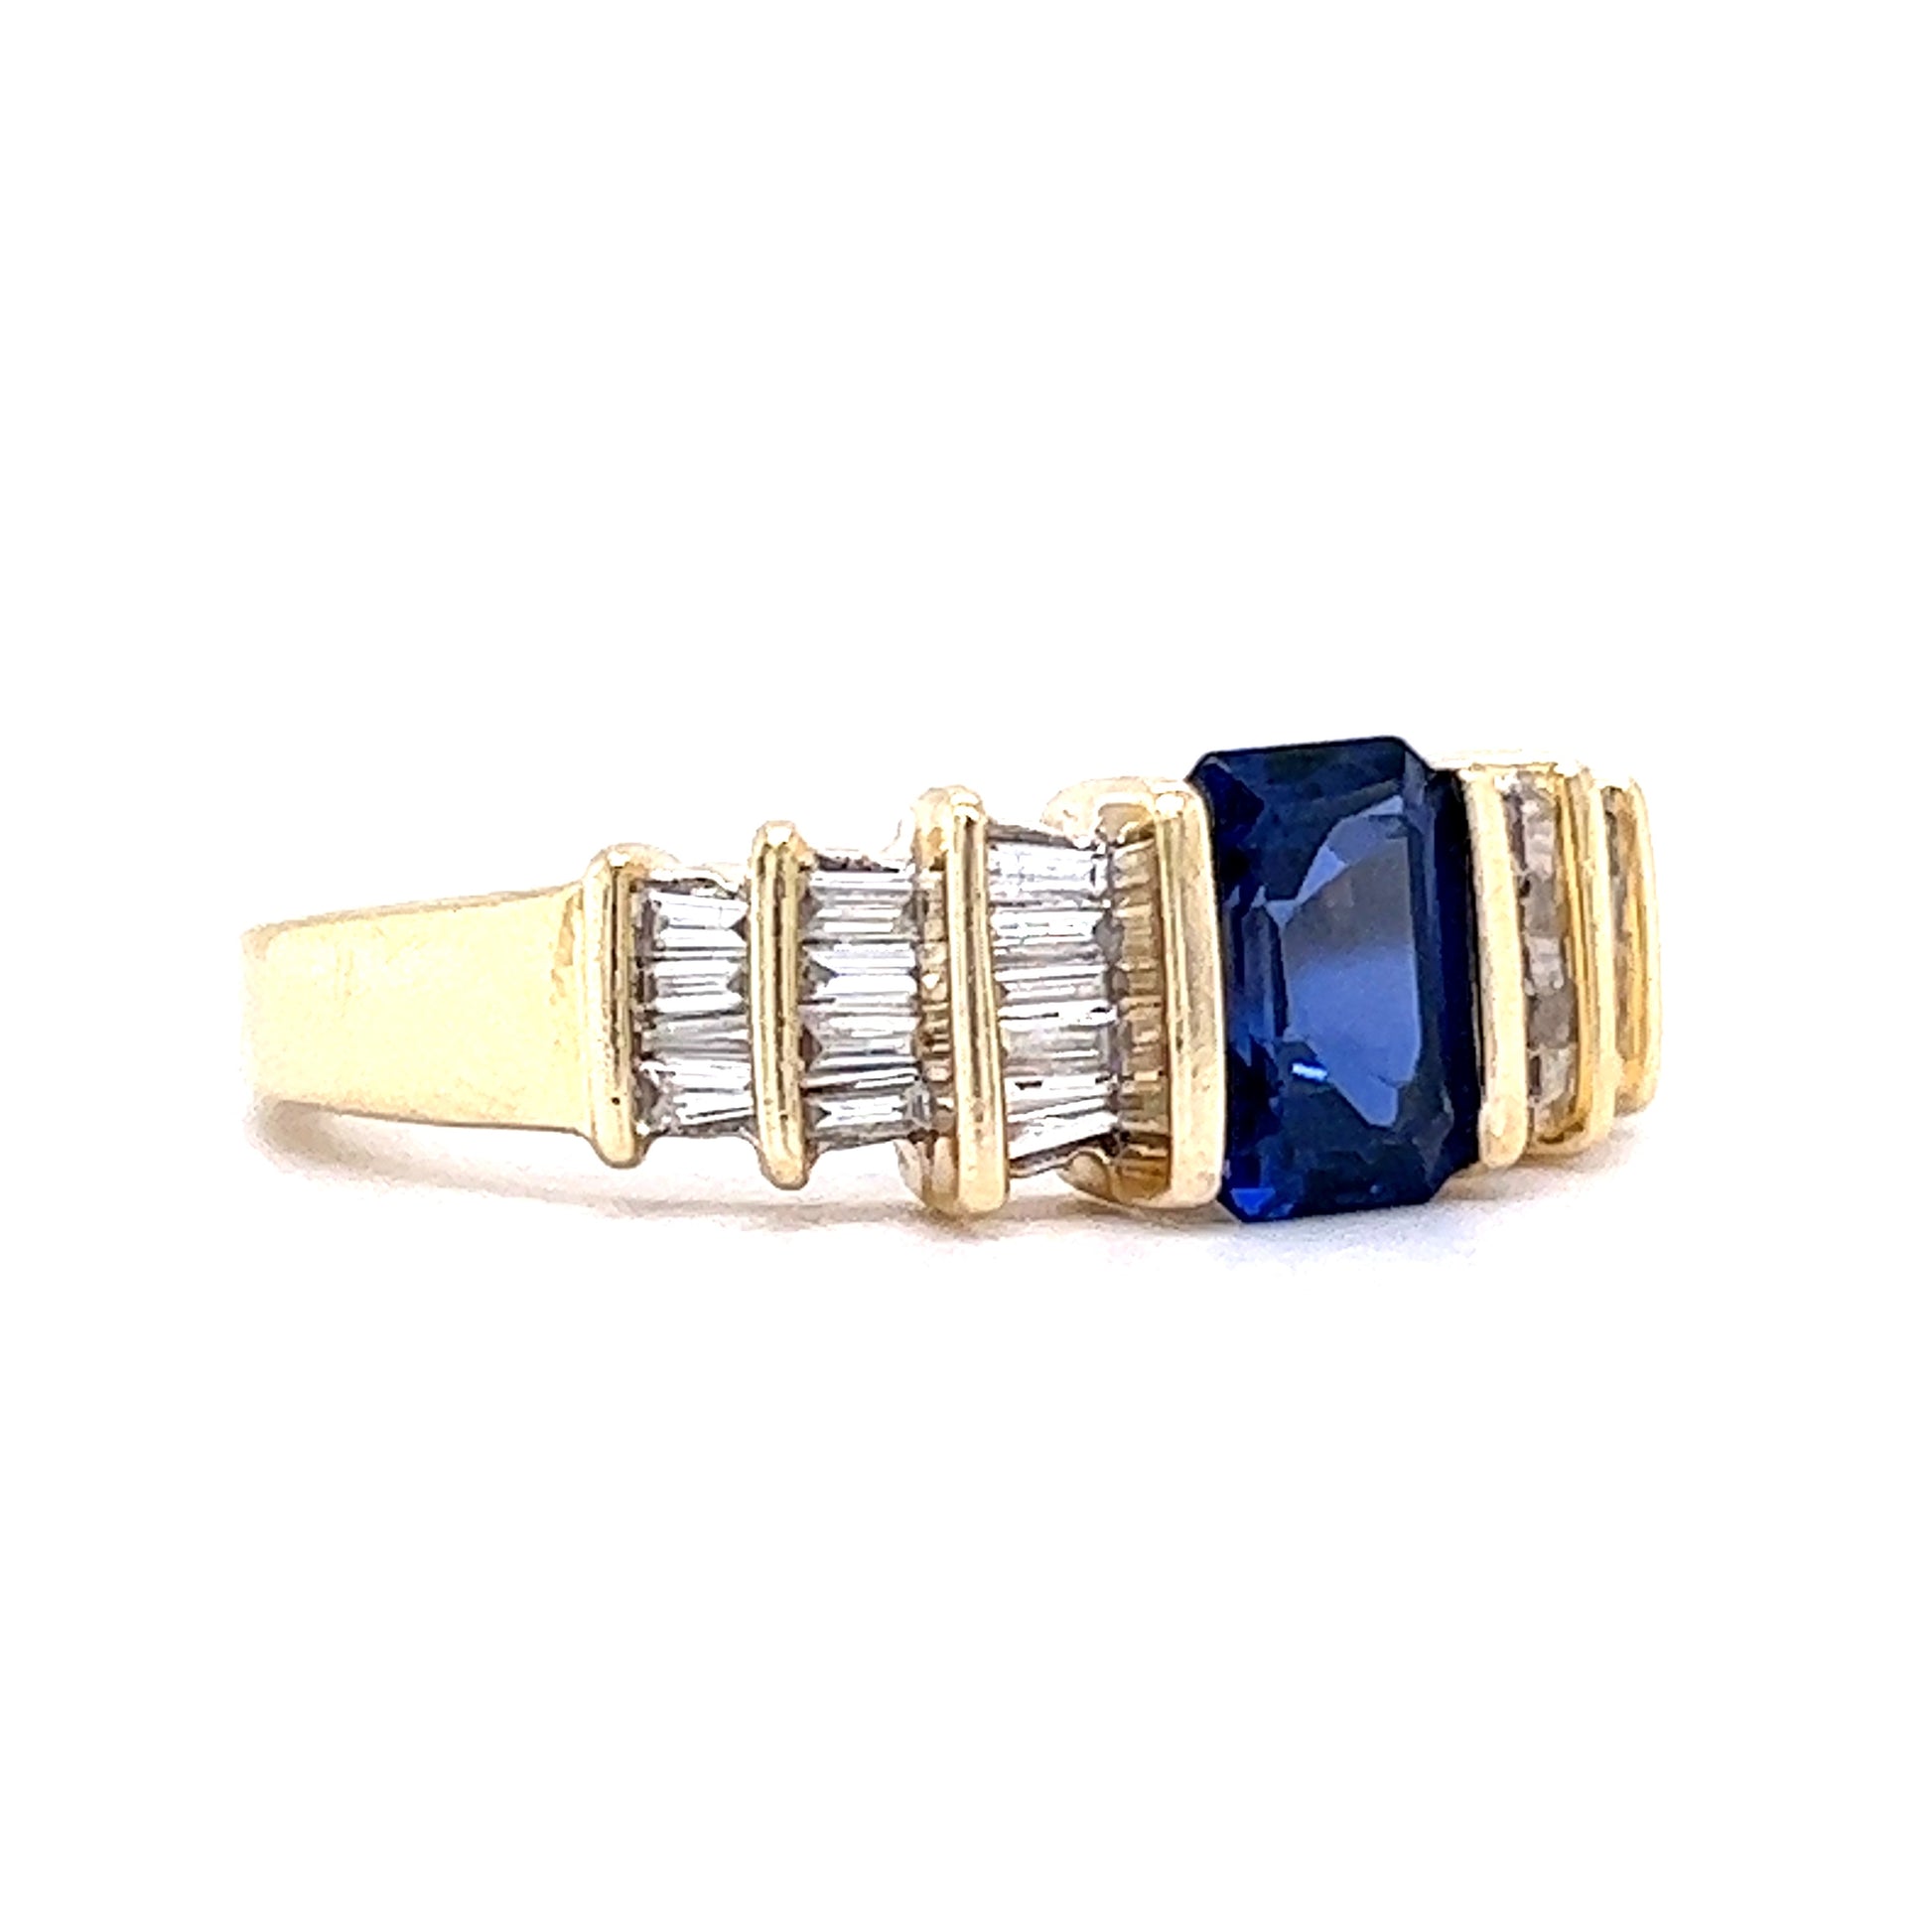 1.30 Emerald Cut Tanzanite Engagement Ring in 14k Yellow GoldComposition: 14 Karat Yellow GoldRing Size: 9.0Total Diamond Weight: .78 ctTotal Gram Weight: 4.0 gInscription: 14k